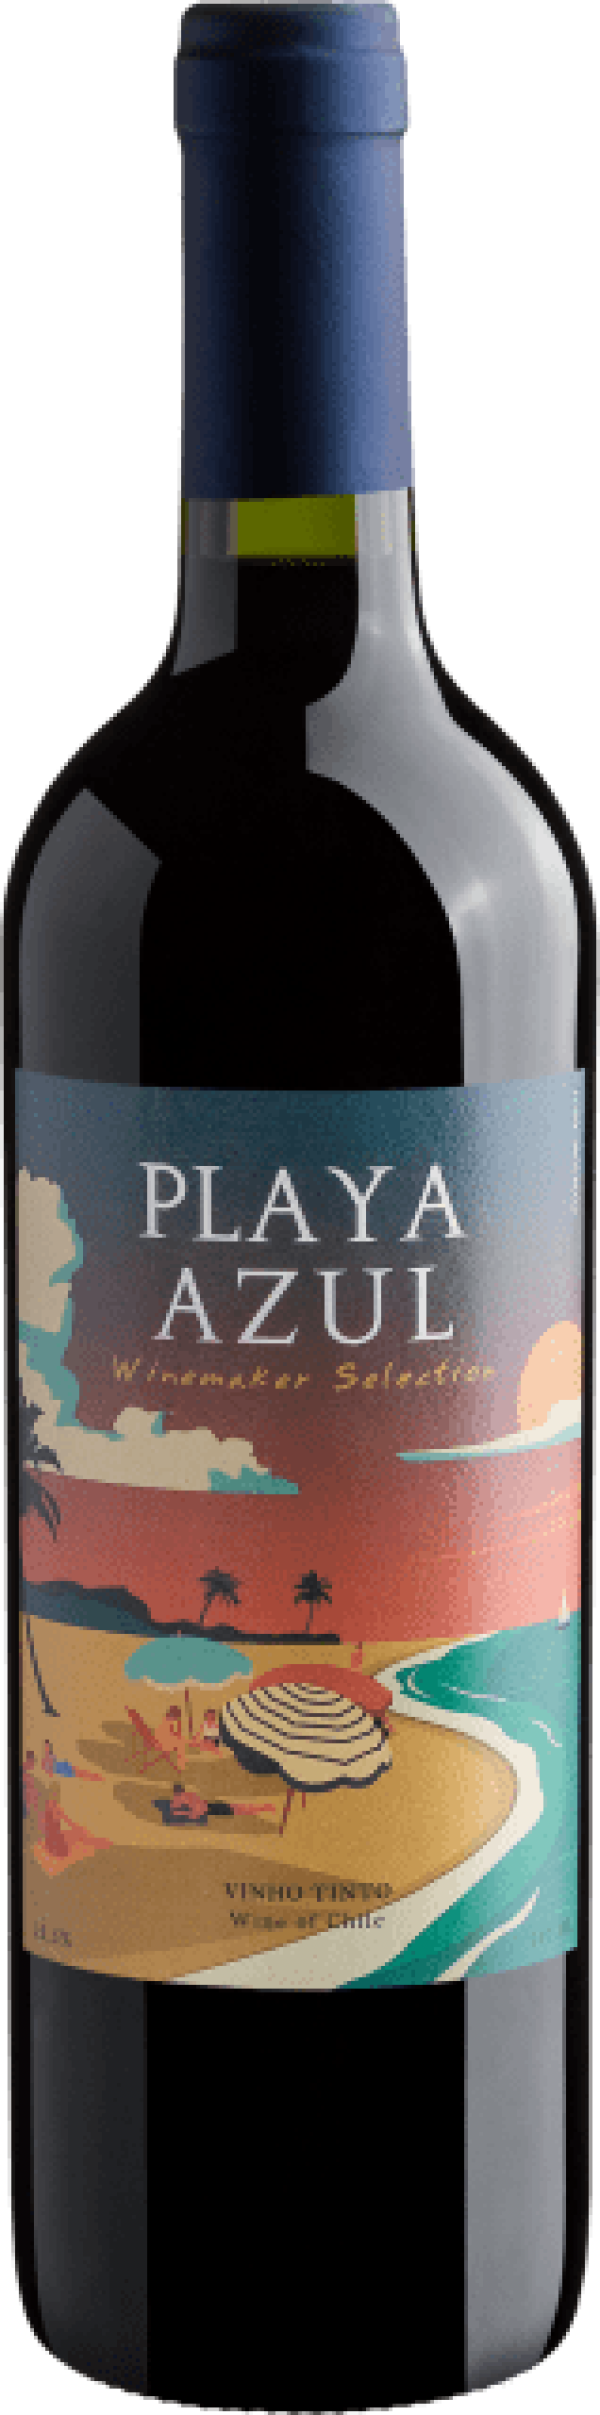 Playa Azul Winemaker Selection Red Blend